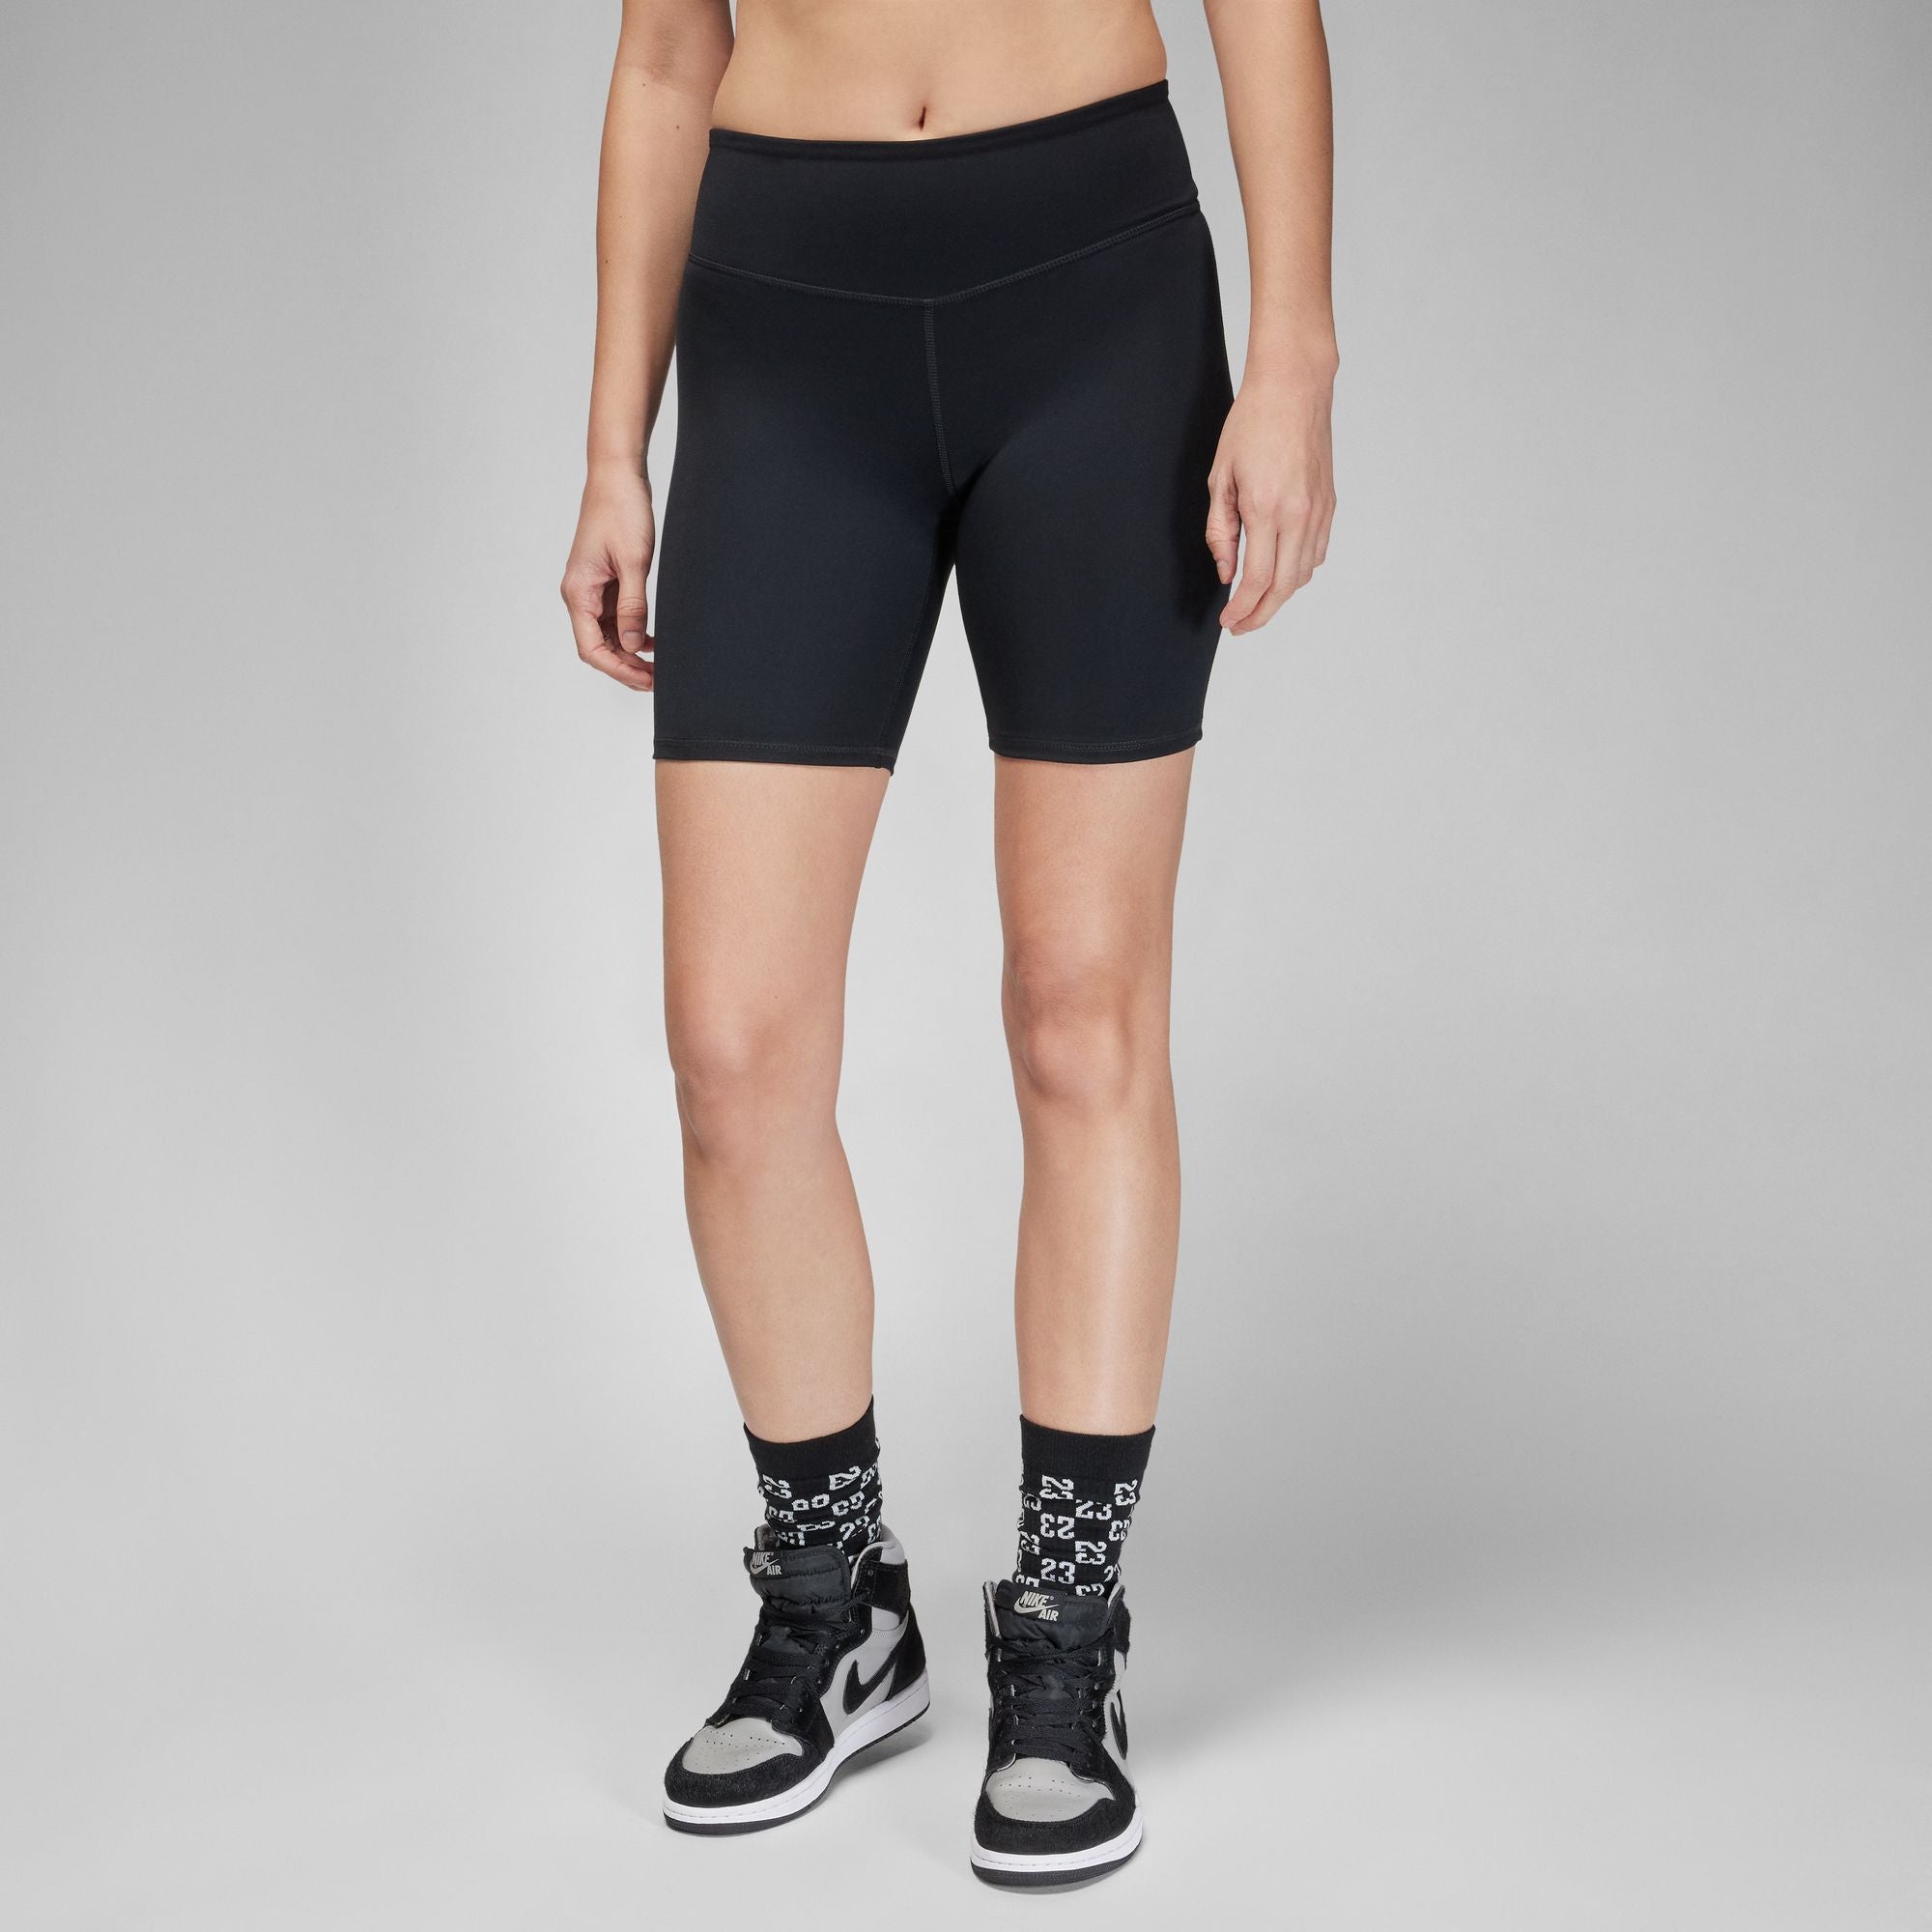 Jordan Sport Women's High-Waisted 7" Bike Shorts